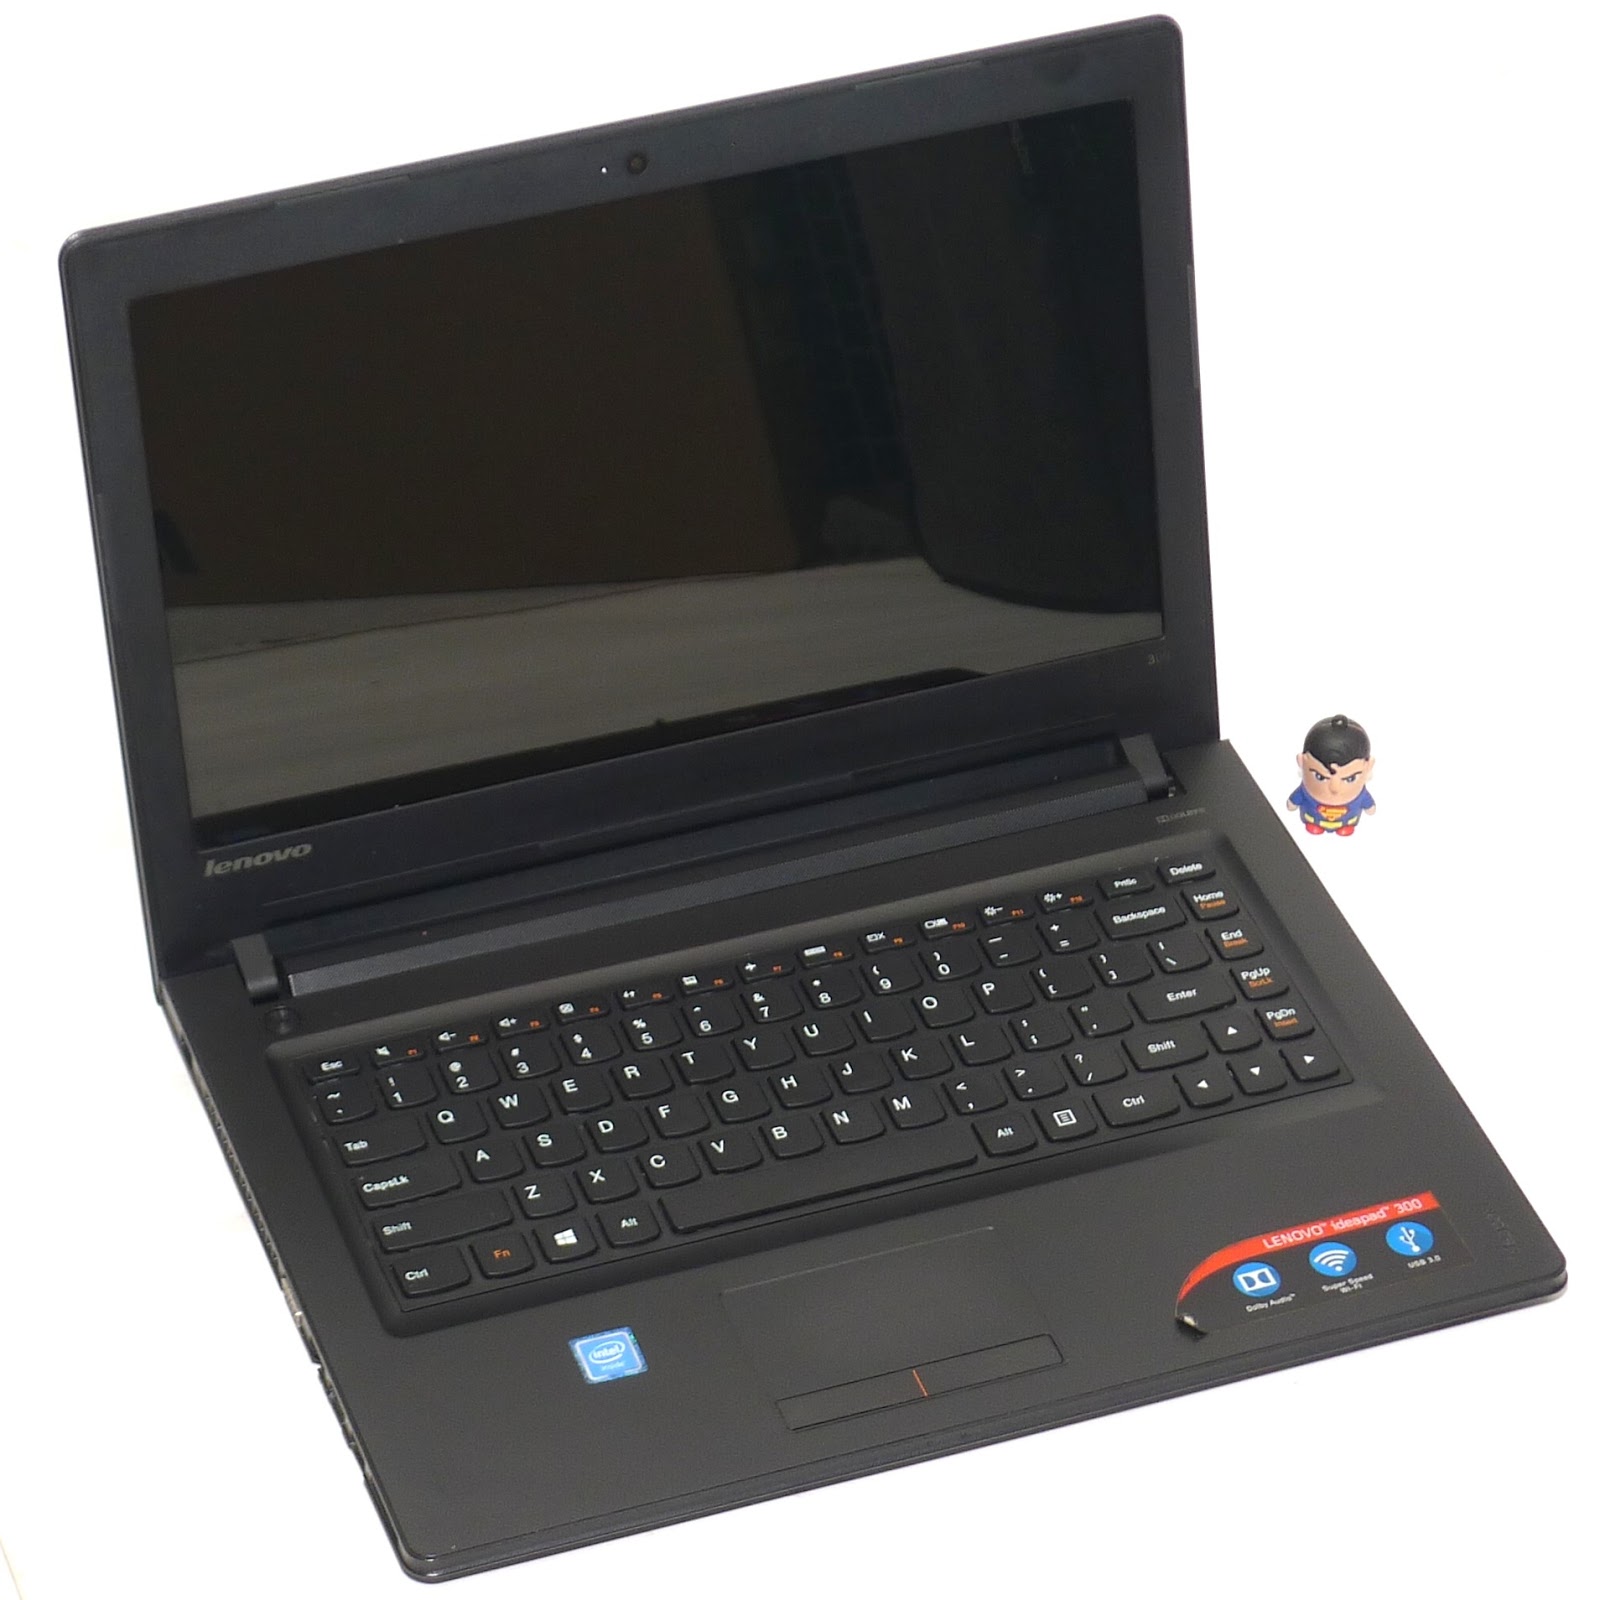 Jual Laptop Lenovo Ideapad 300 14ibr Second Jual Beli Laptop Bekas